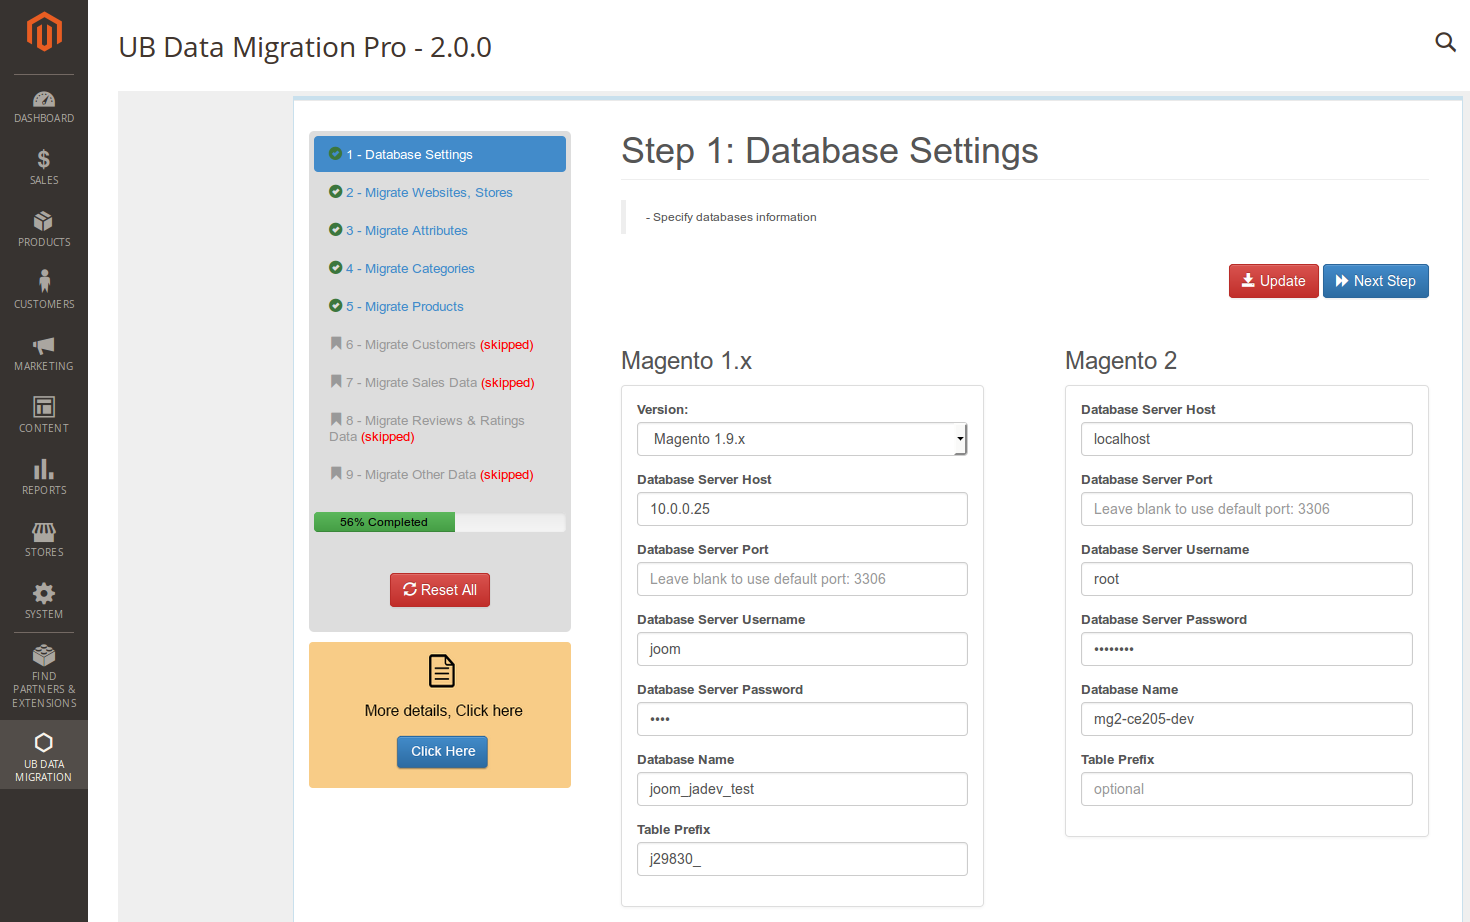 Step 1 - Database settings